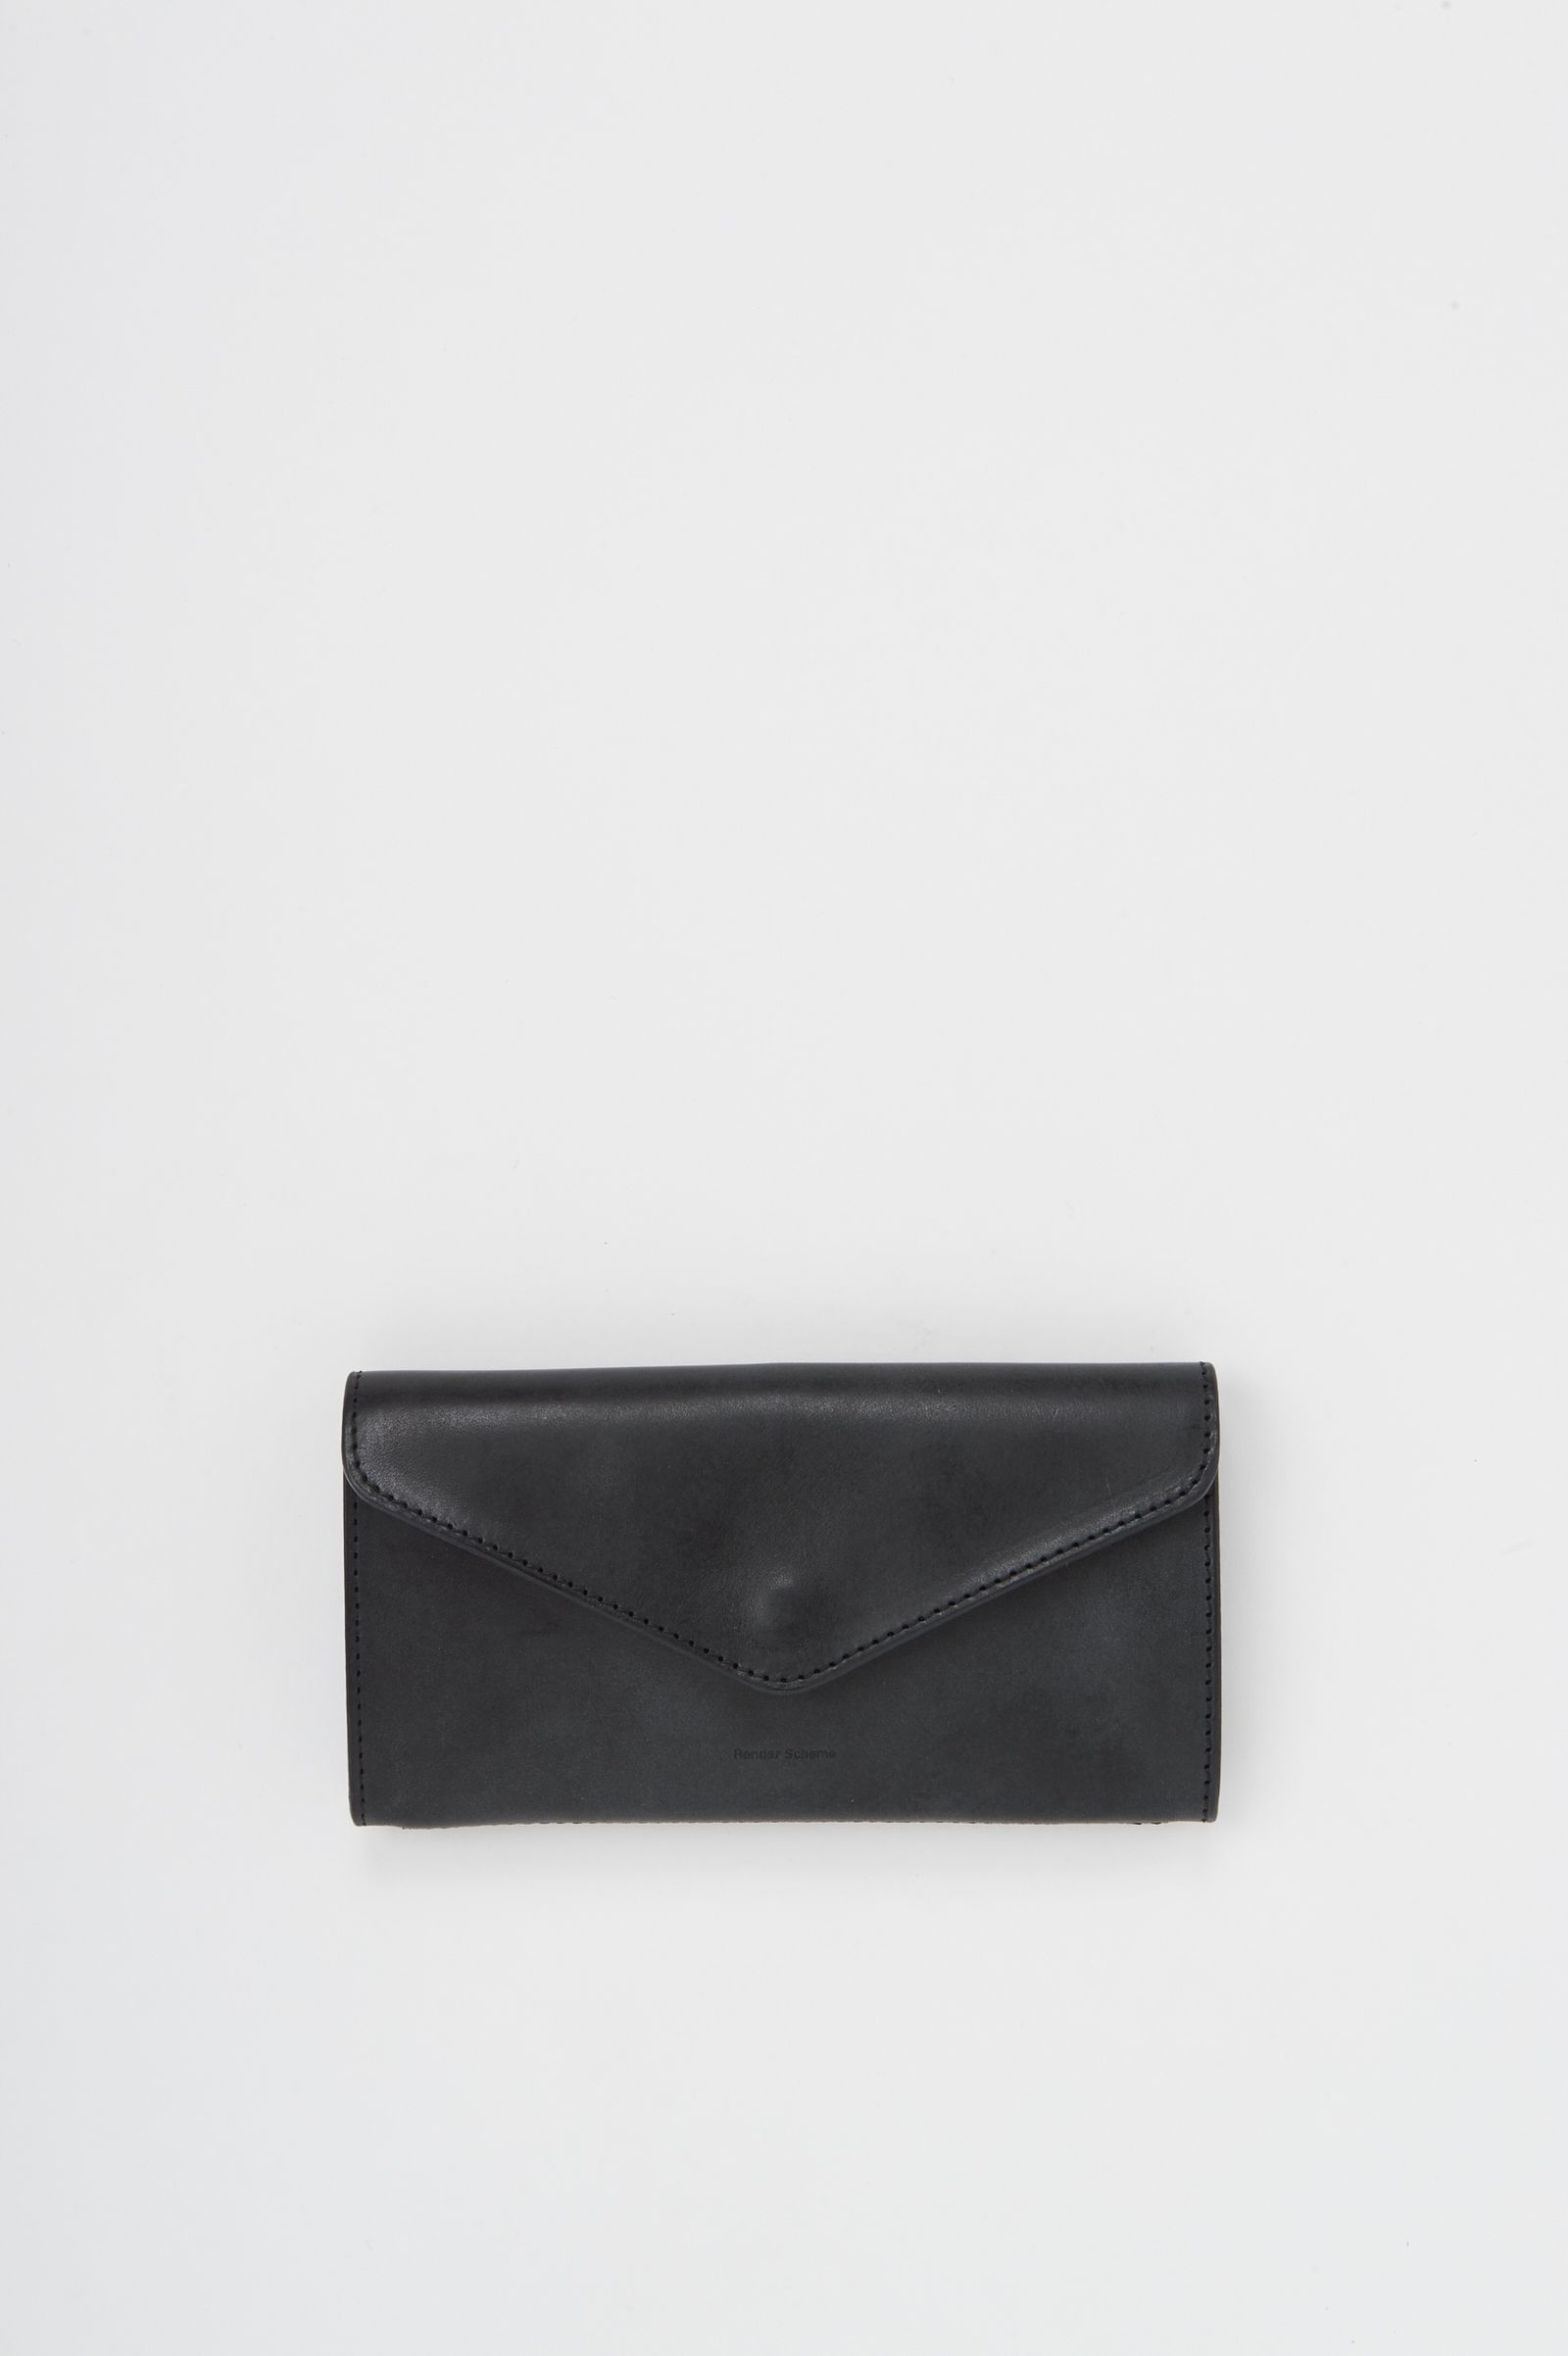 Hender Scheme - エンダースキーマ 財布 long wallet(ot-rc-lwl)black 